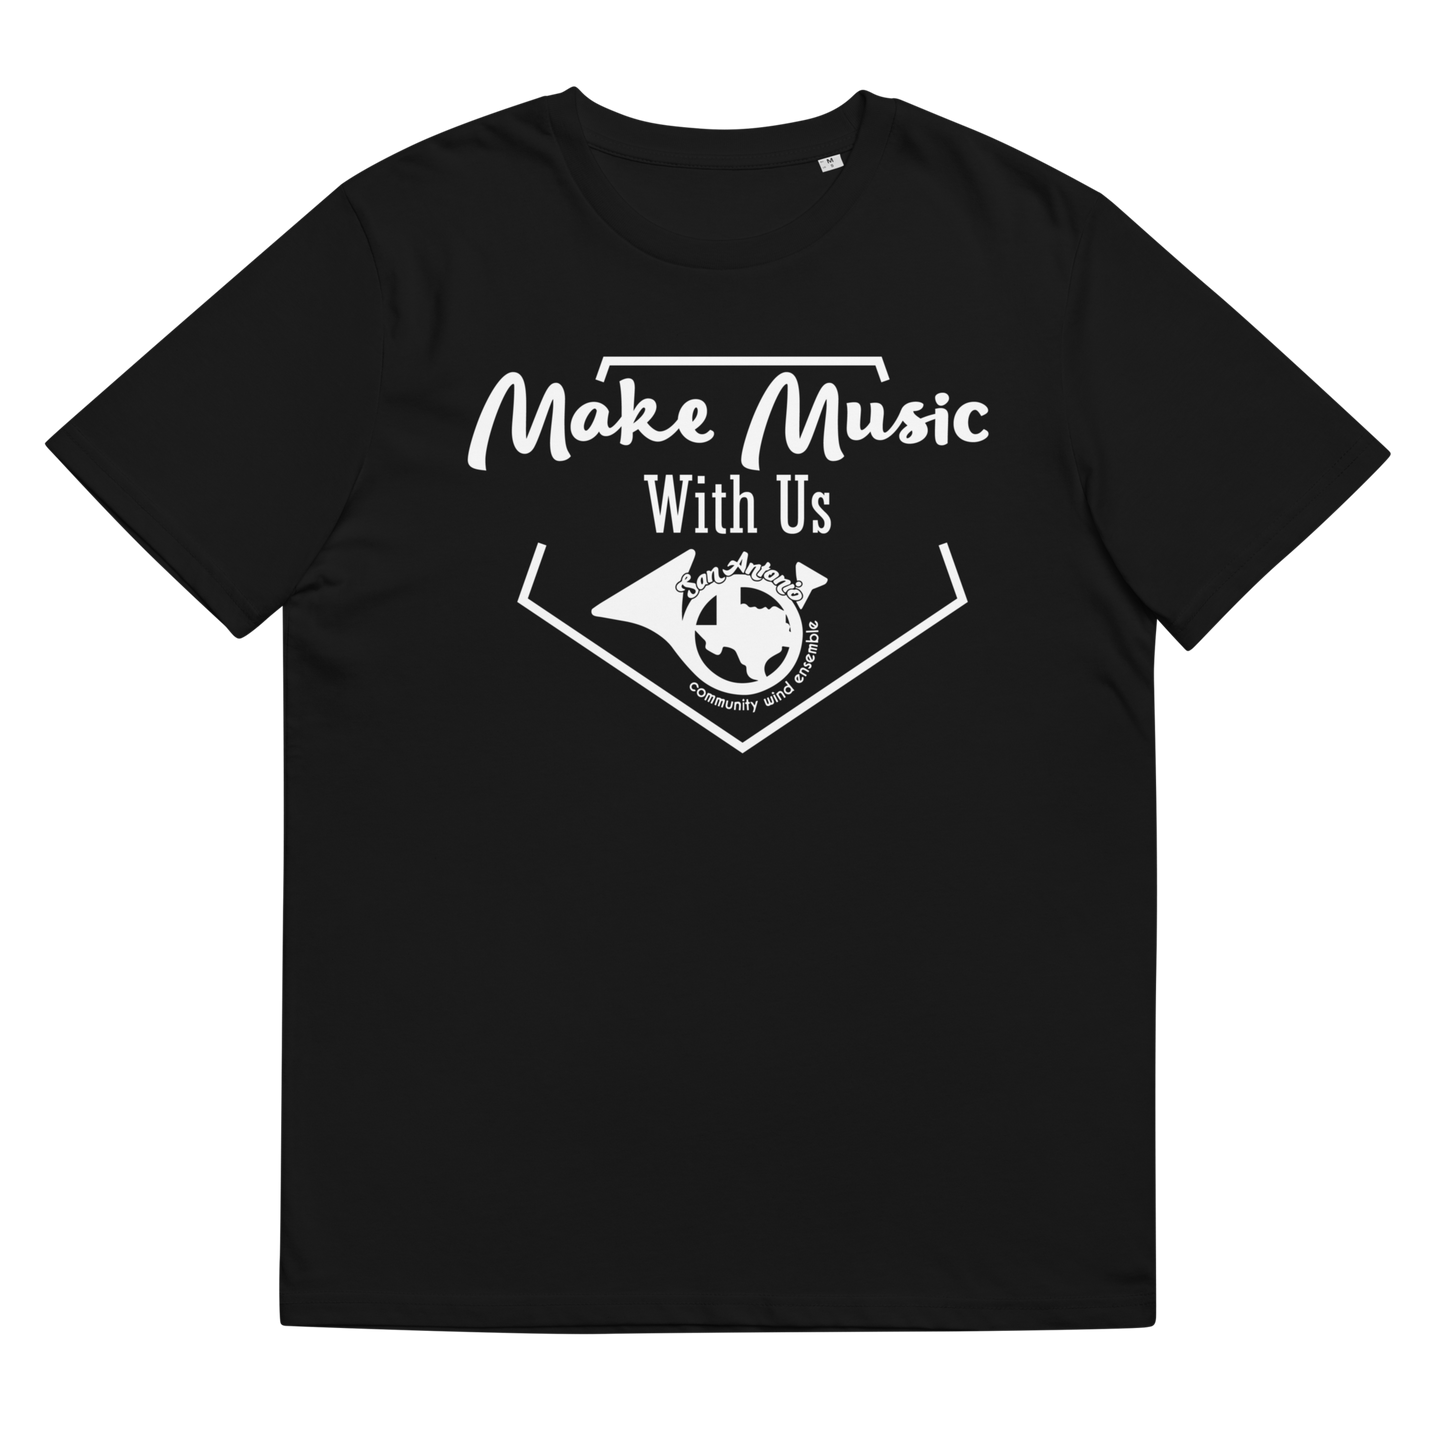 Make Music With Us! Unisex organic cotton t-shirt